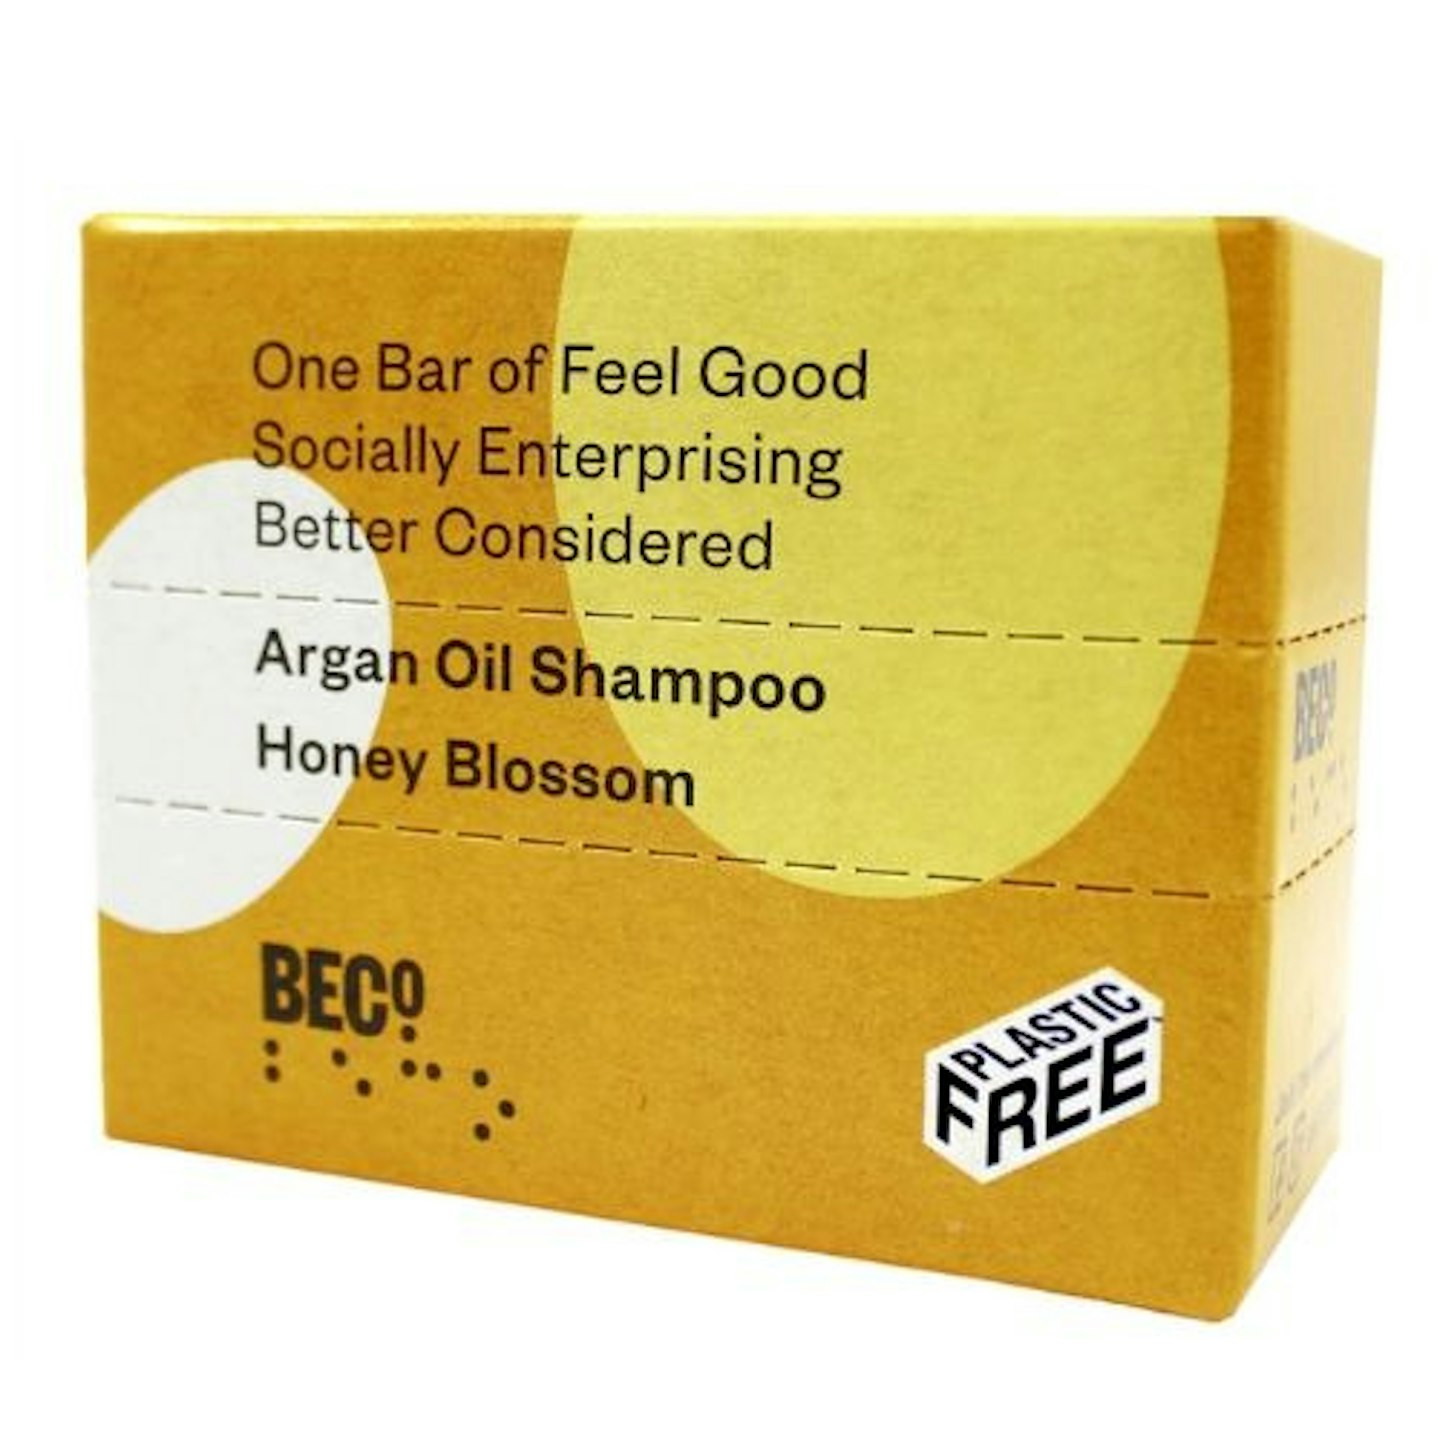 Beco Argan Oil Shampoo Bar